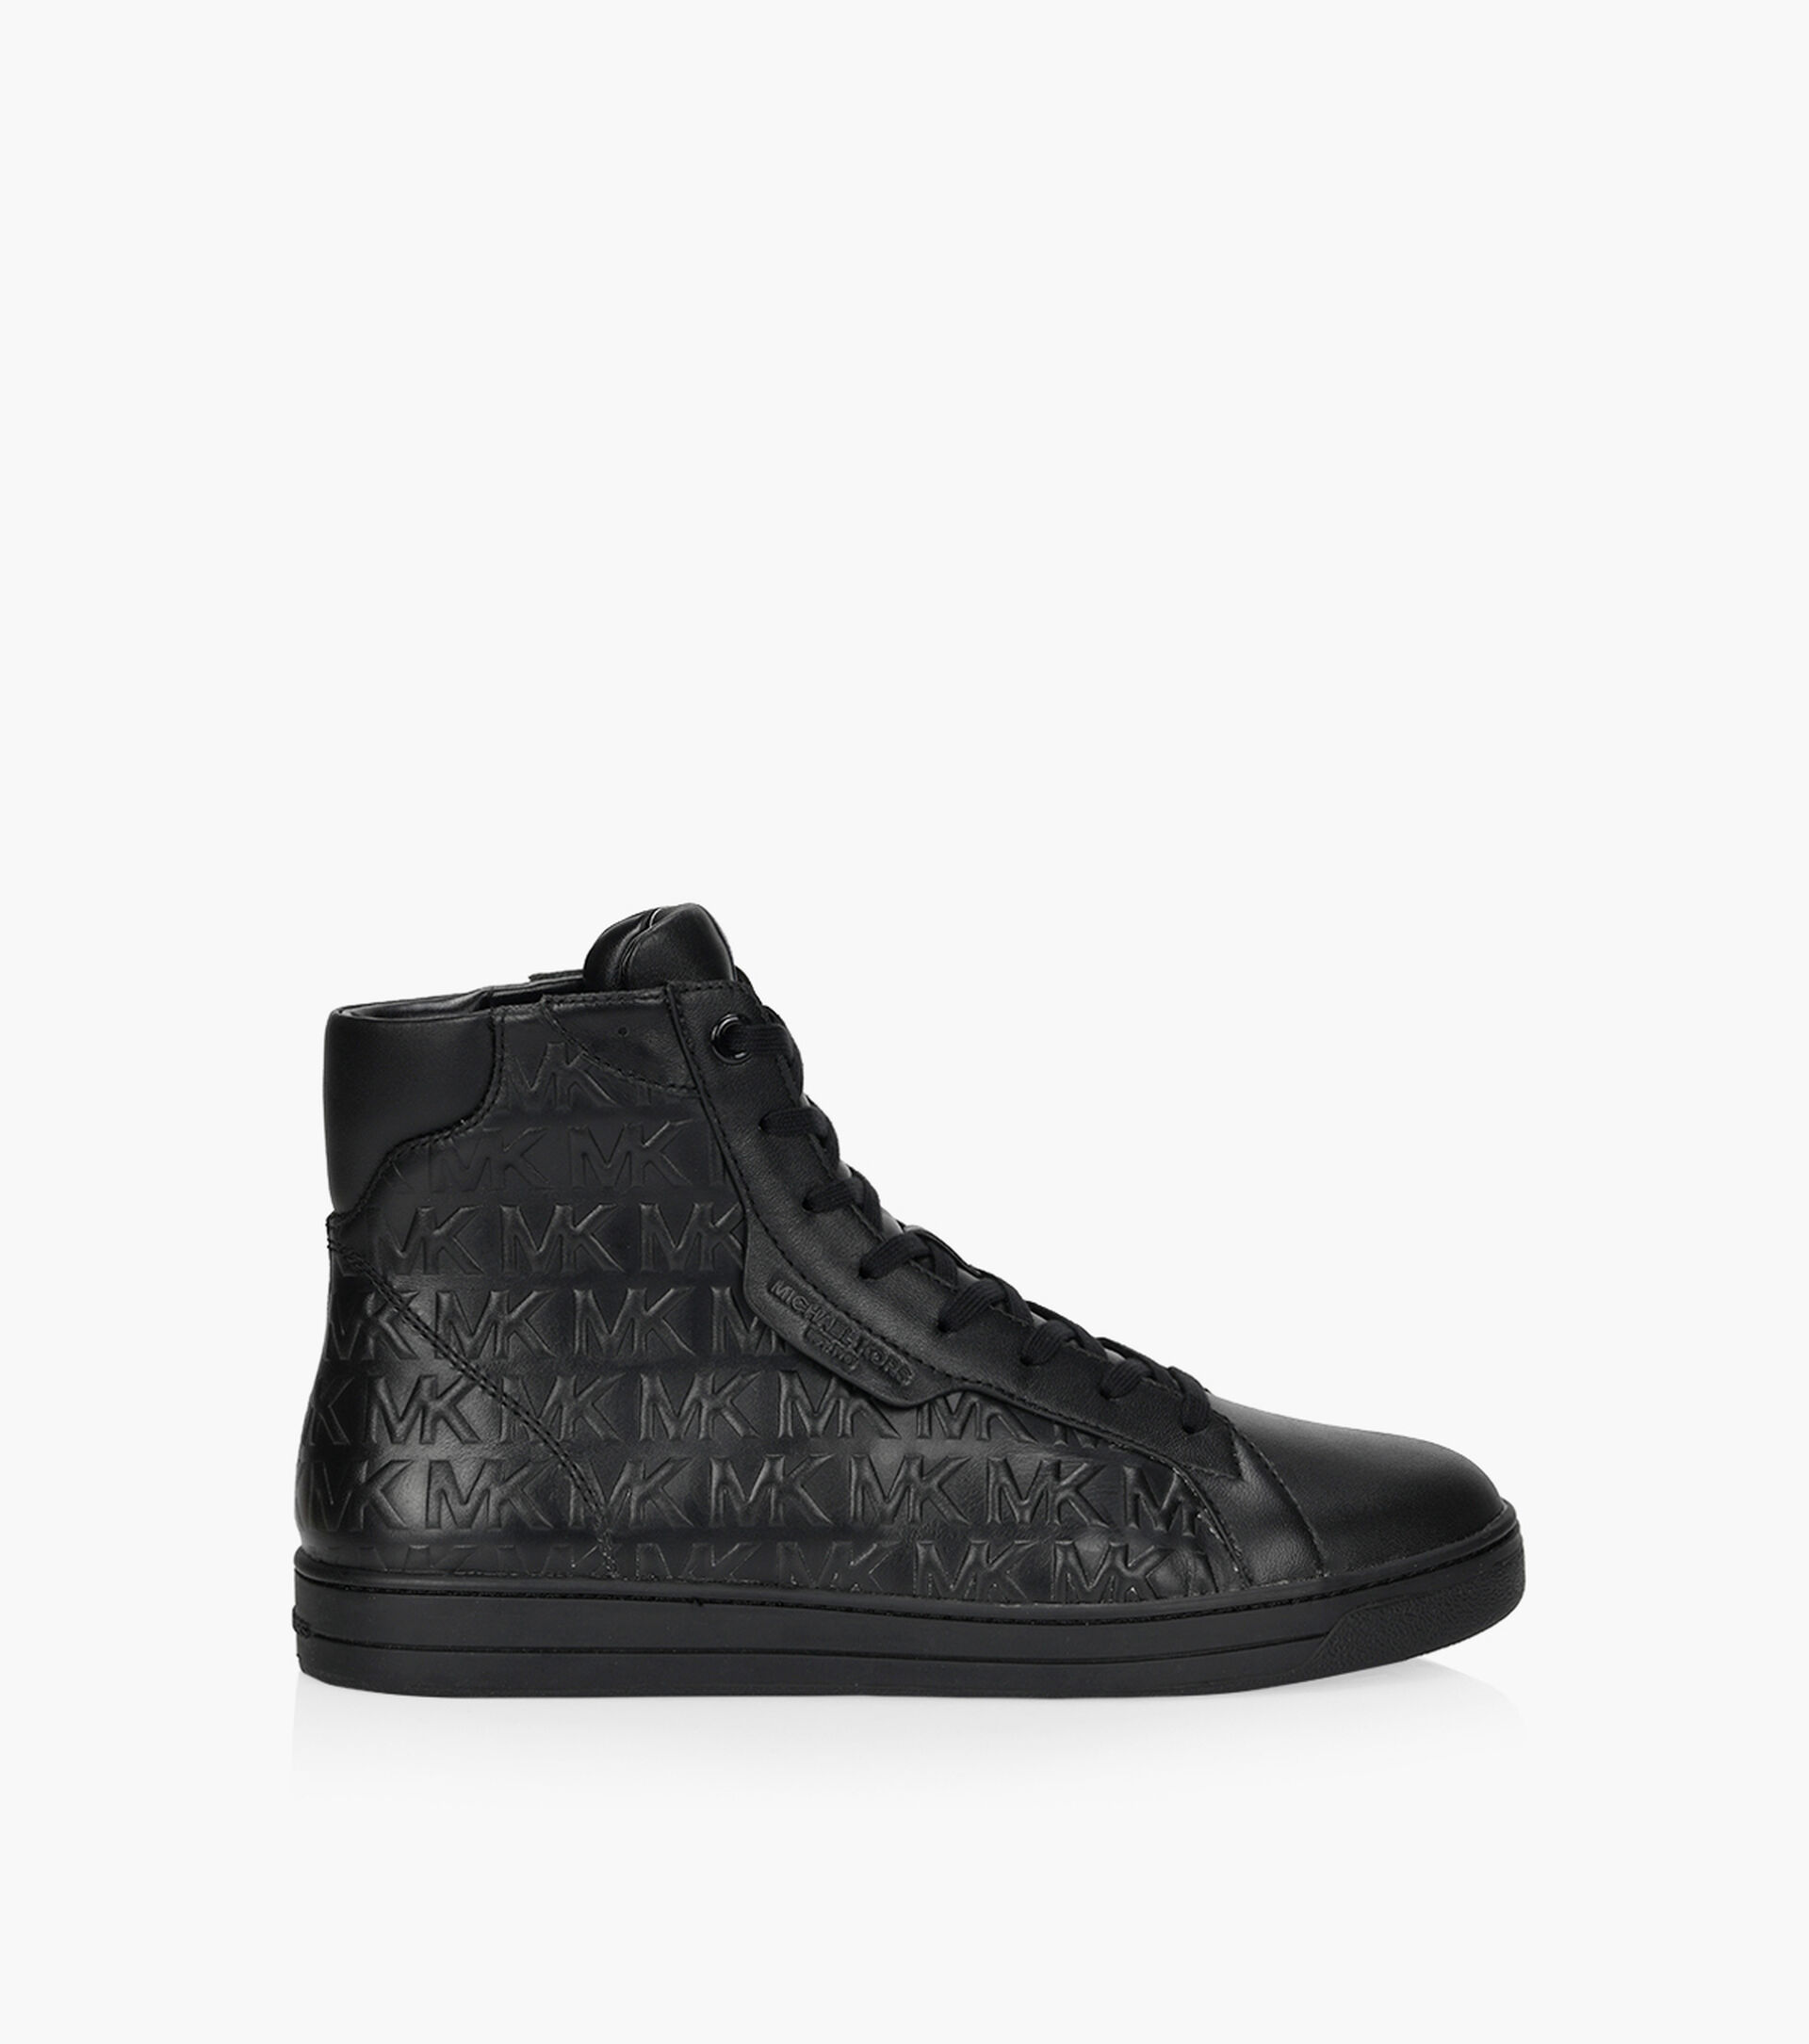 MICHAEL KORS MENS KEATING HI-TOP - Black Leather | Browns Shoes